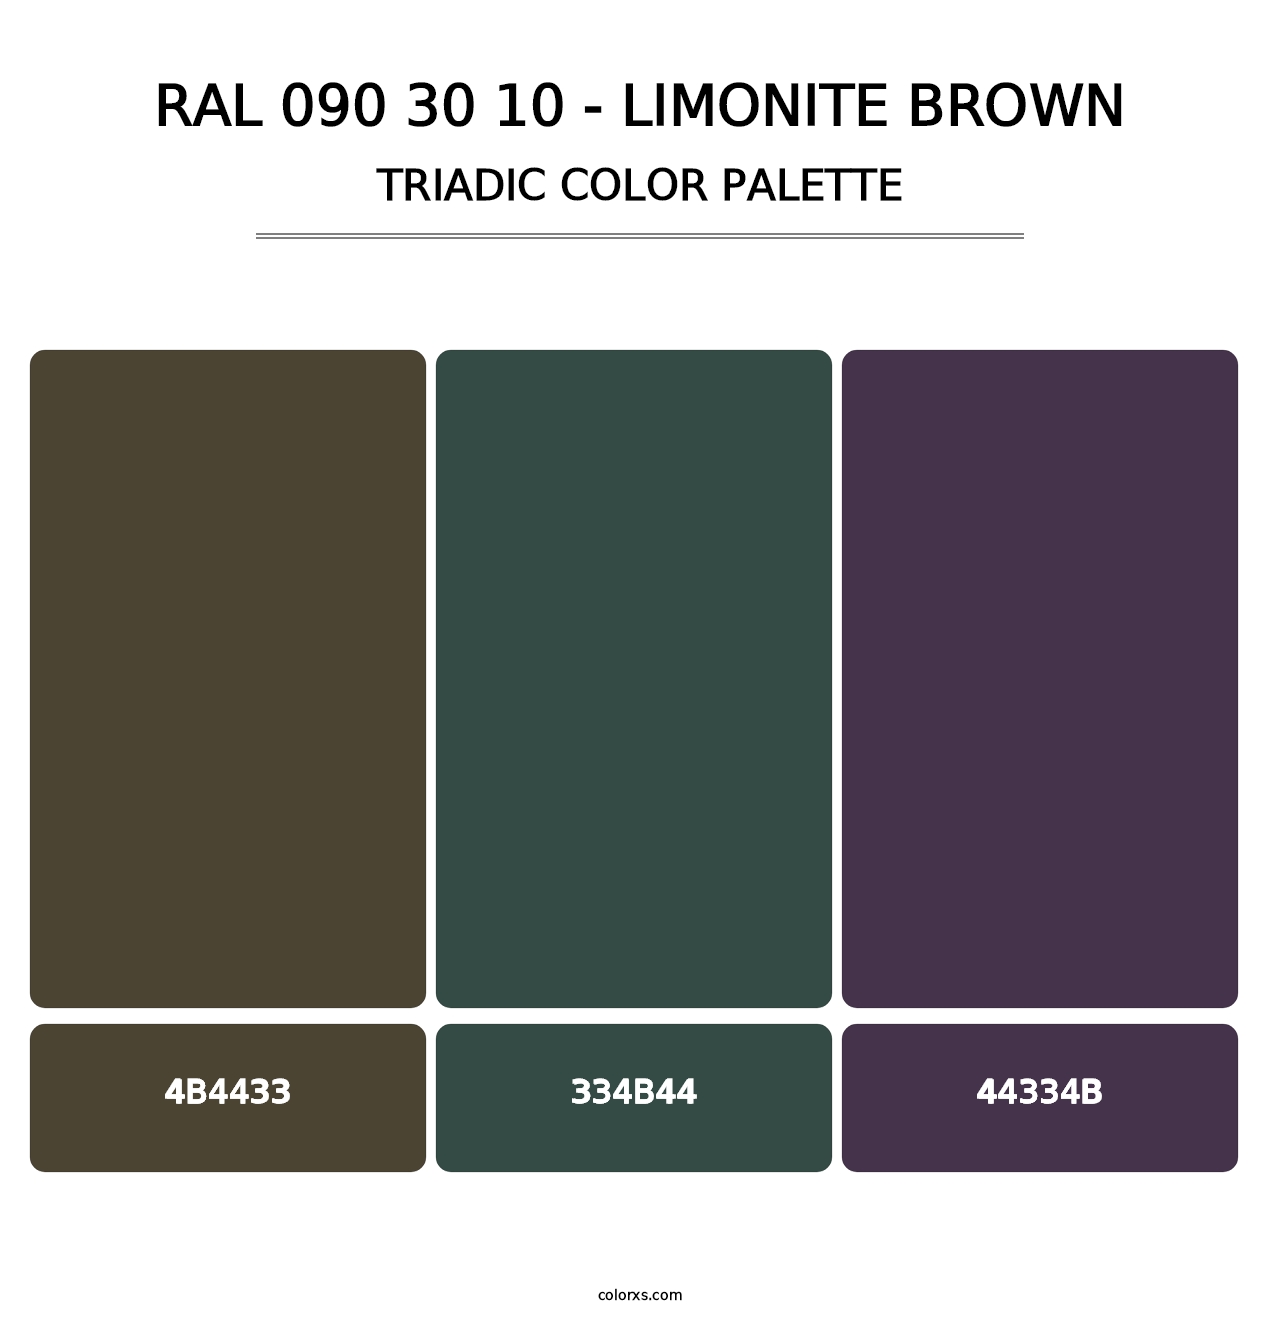 RAL 090 30 10 - Limonite Brown - Triadic Color Palette